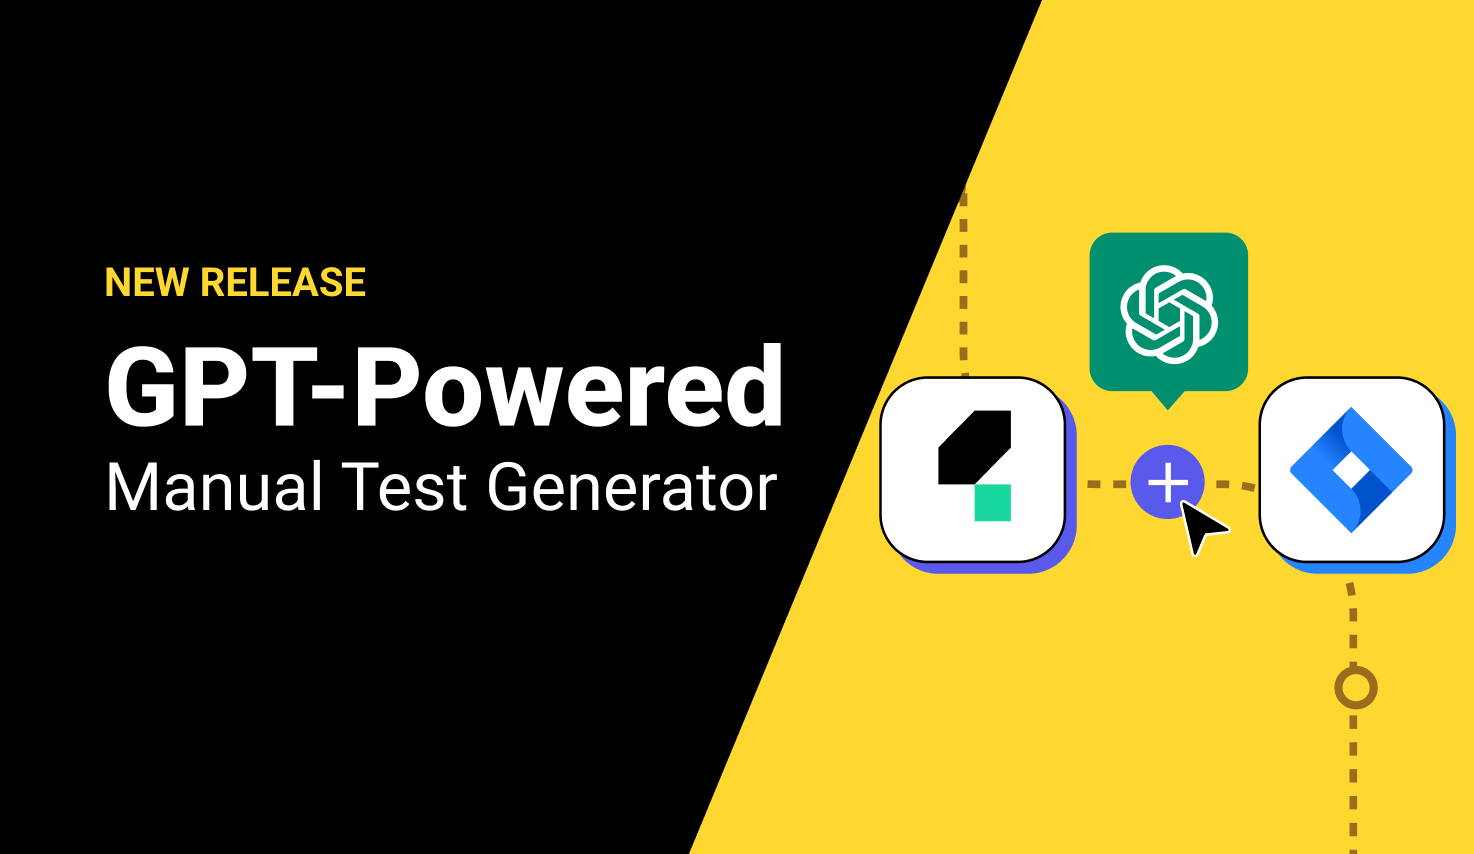 GPT-Powered Manual Test Generator by Katalon